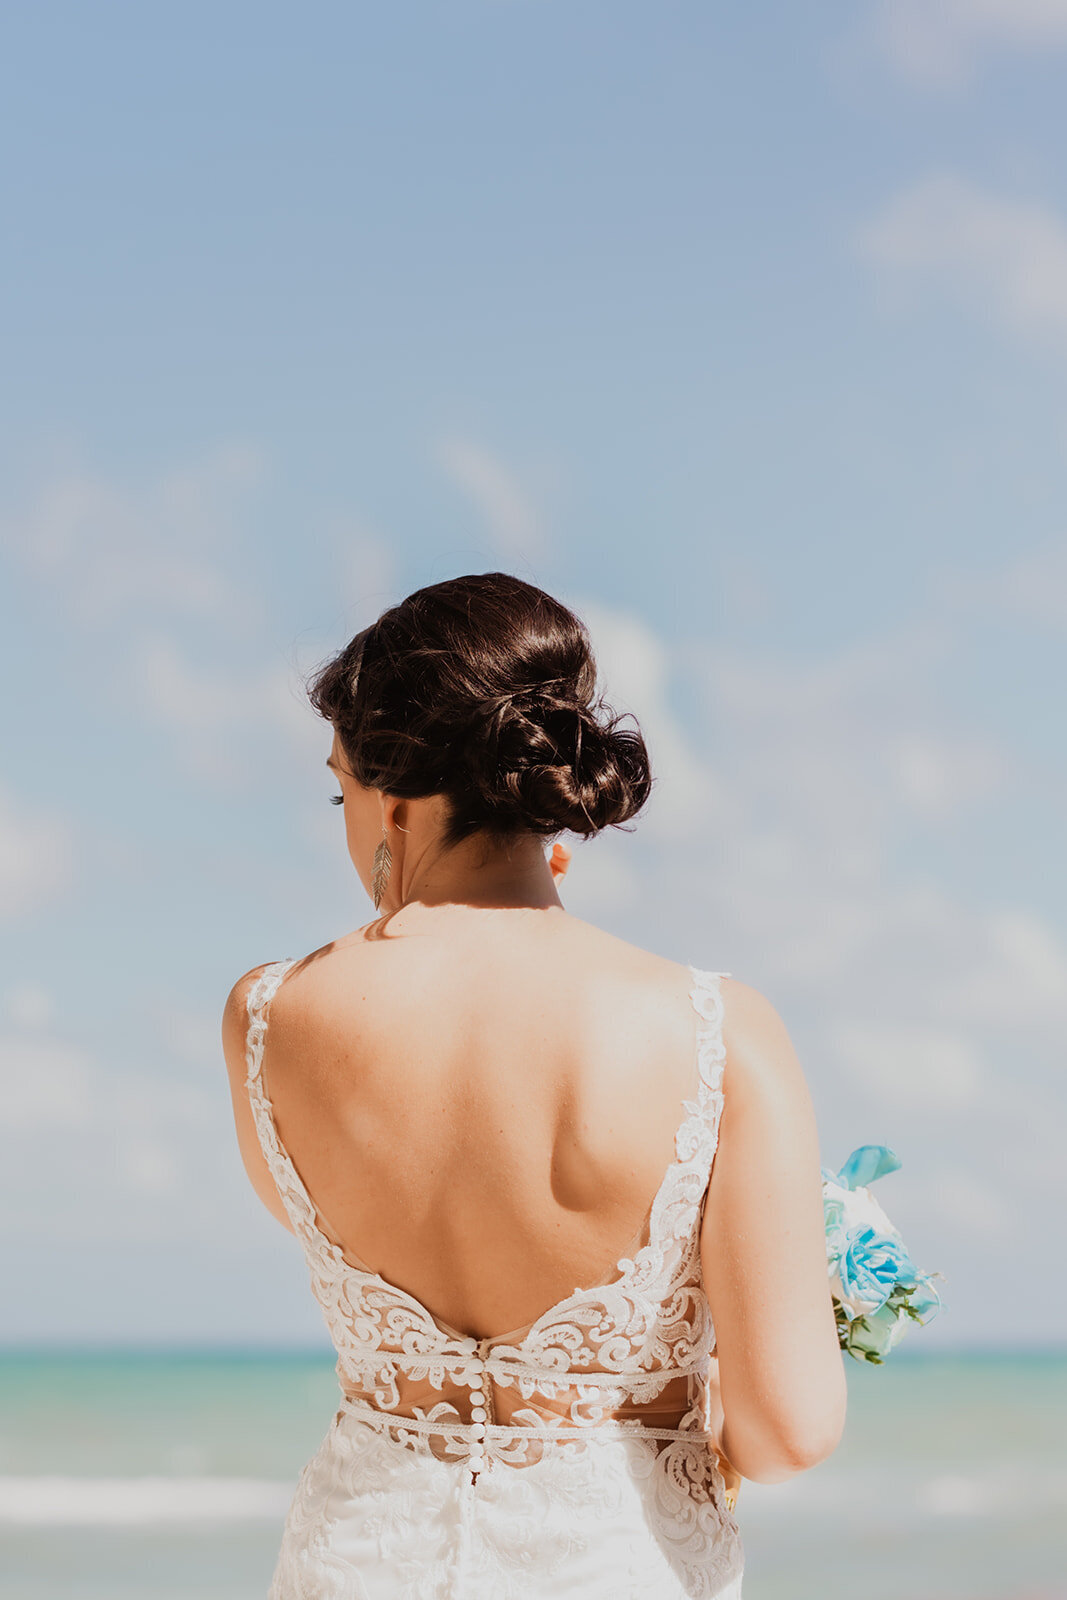 Jessica-Rae-Schulz-Edmonton-Photographer-Wedding-Destination-Mexico-Ocean-Bride-2